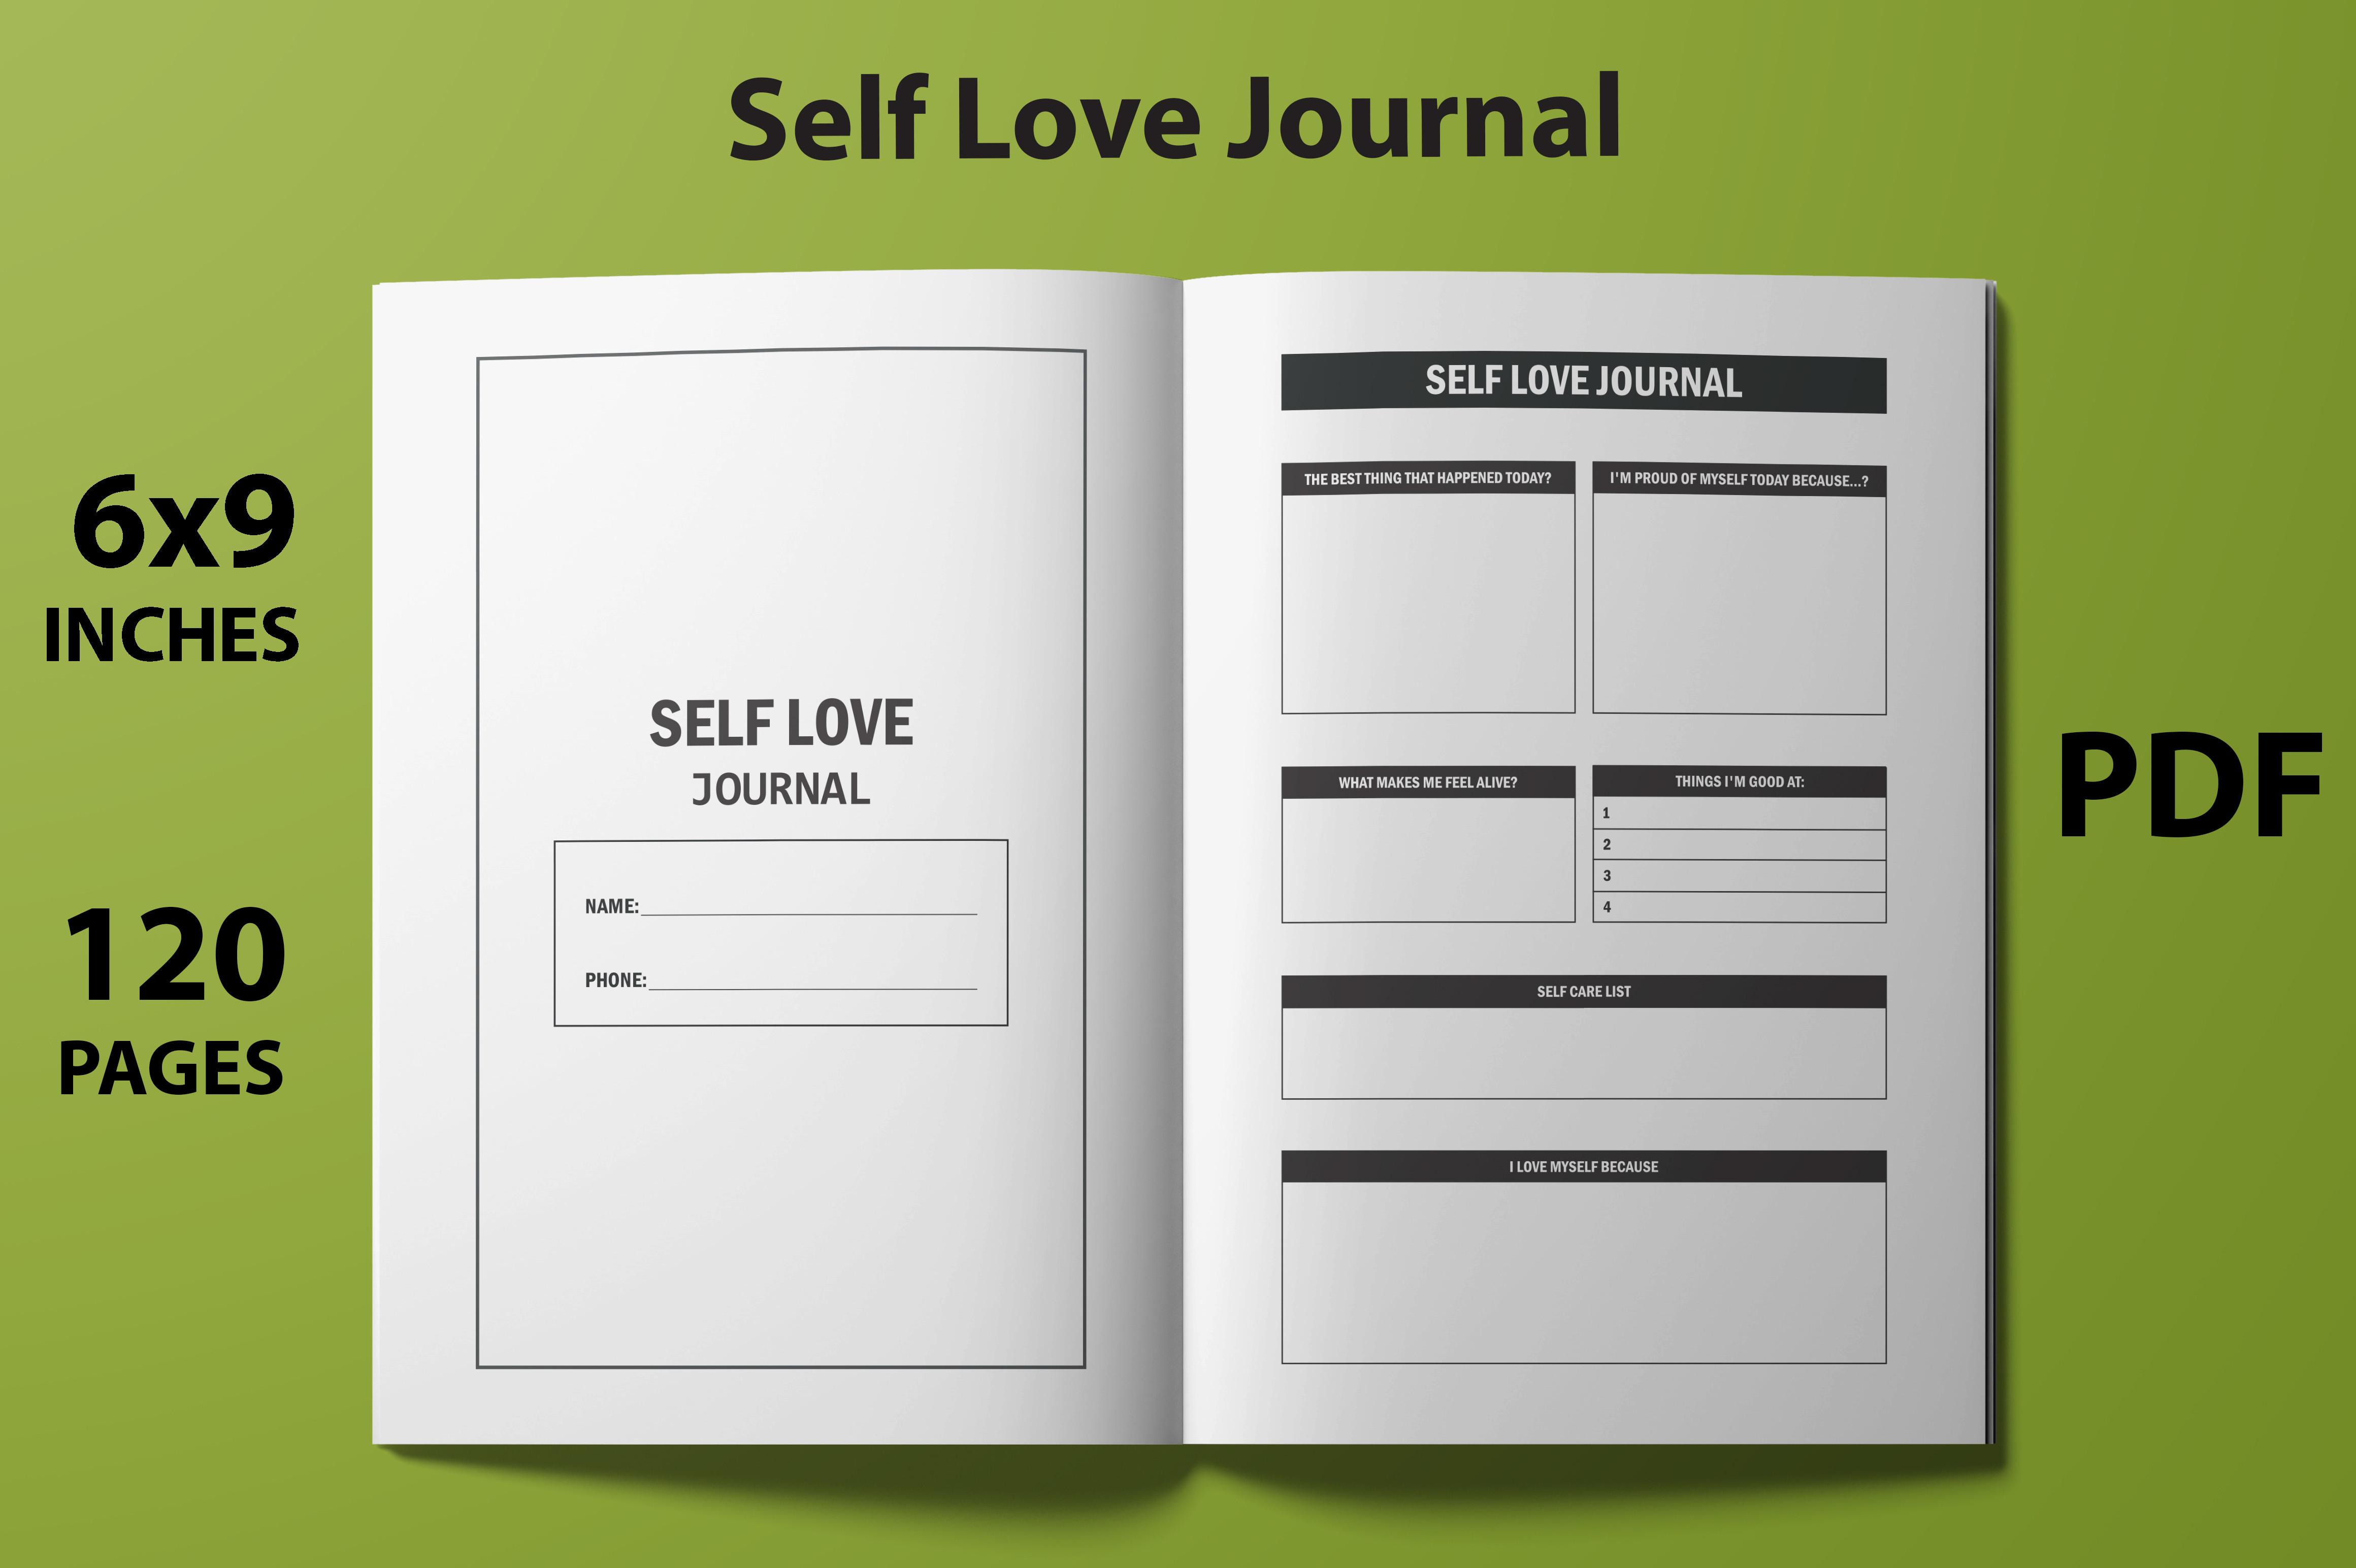 KDP Self Love Journal